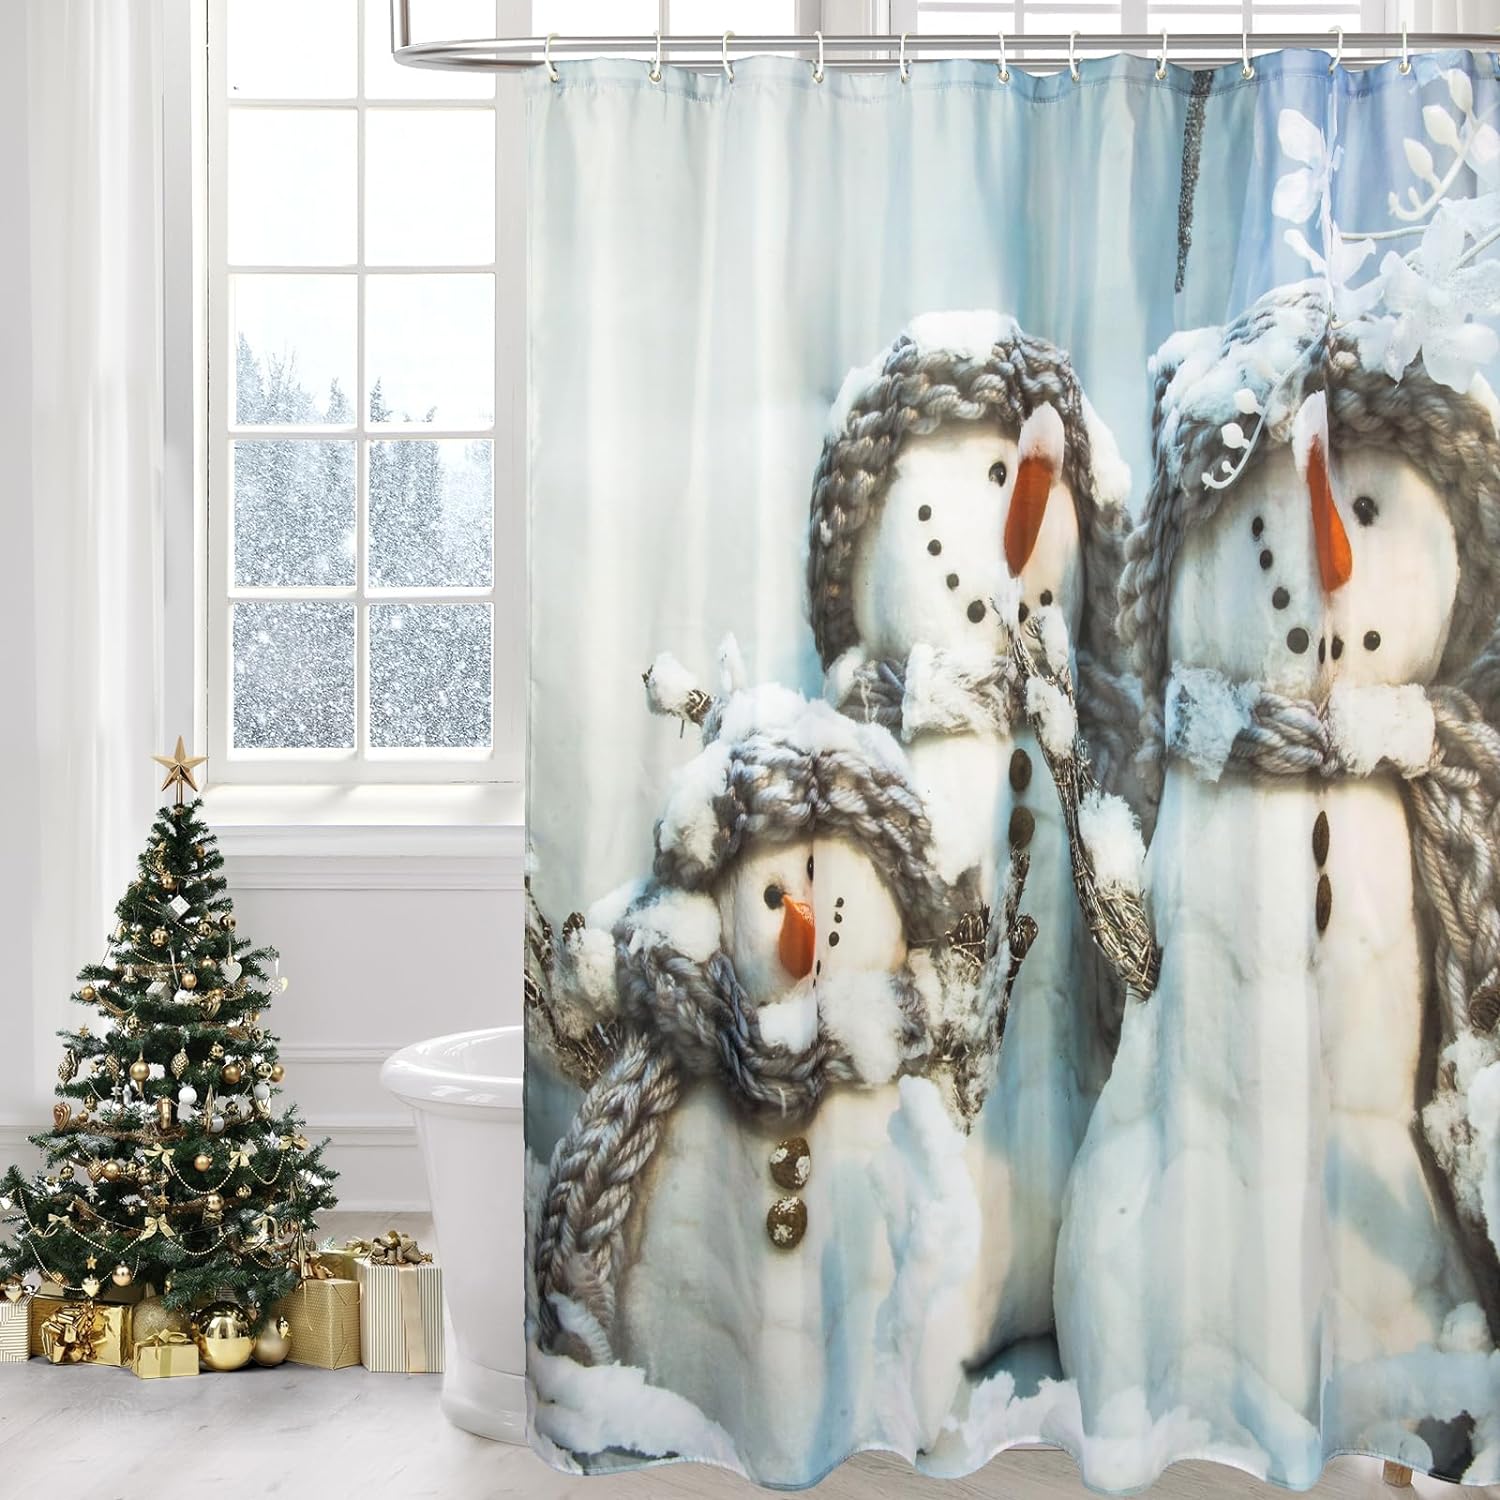 QIYI Christmas Shower Curtain Set, New Year Snowman Bathroom Accessories Holiday Home Dcor, Grey Snowy Winter Waterproof Bathtub Curtain, Kids Cute Merry Xmas Bath Curtain with 12 Hooks 72 W x 72 L